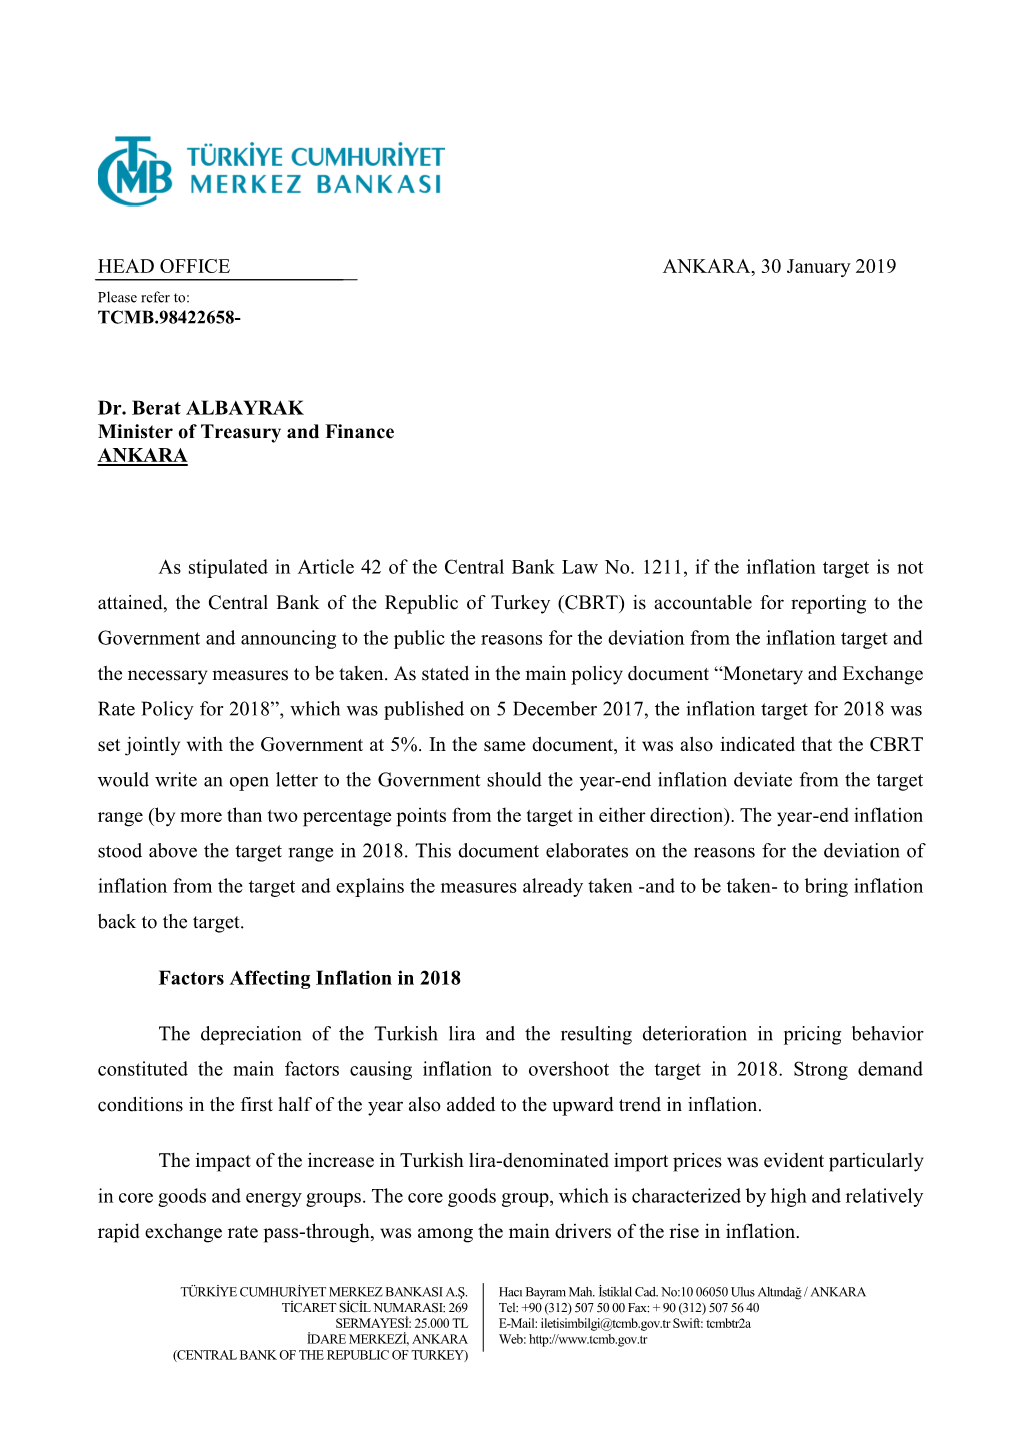 HEAD OFFICE ANKARA, 30 January 2019 Dr. Berat ALBAYRAK Minister of Treasury and Finance ANKARA As Stipulated in Article 42